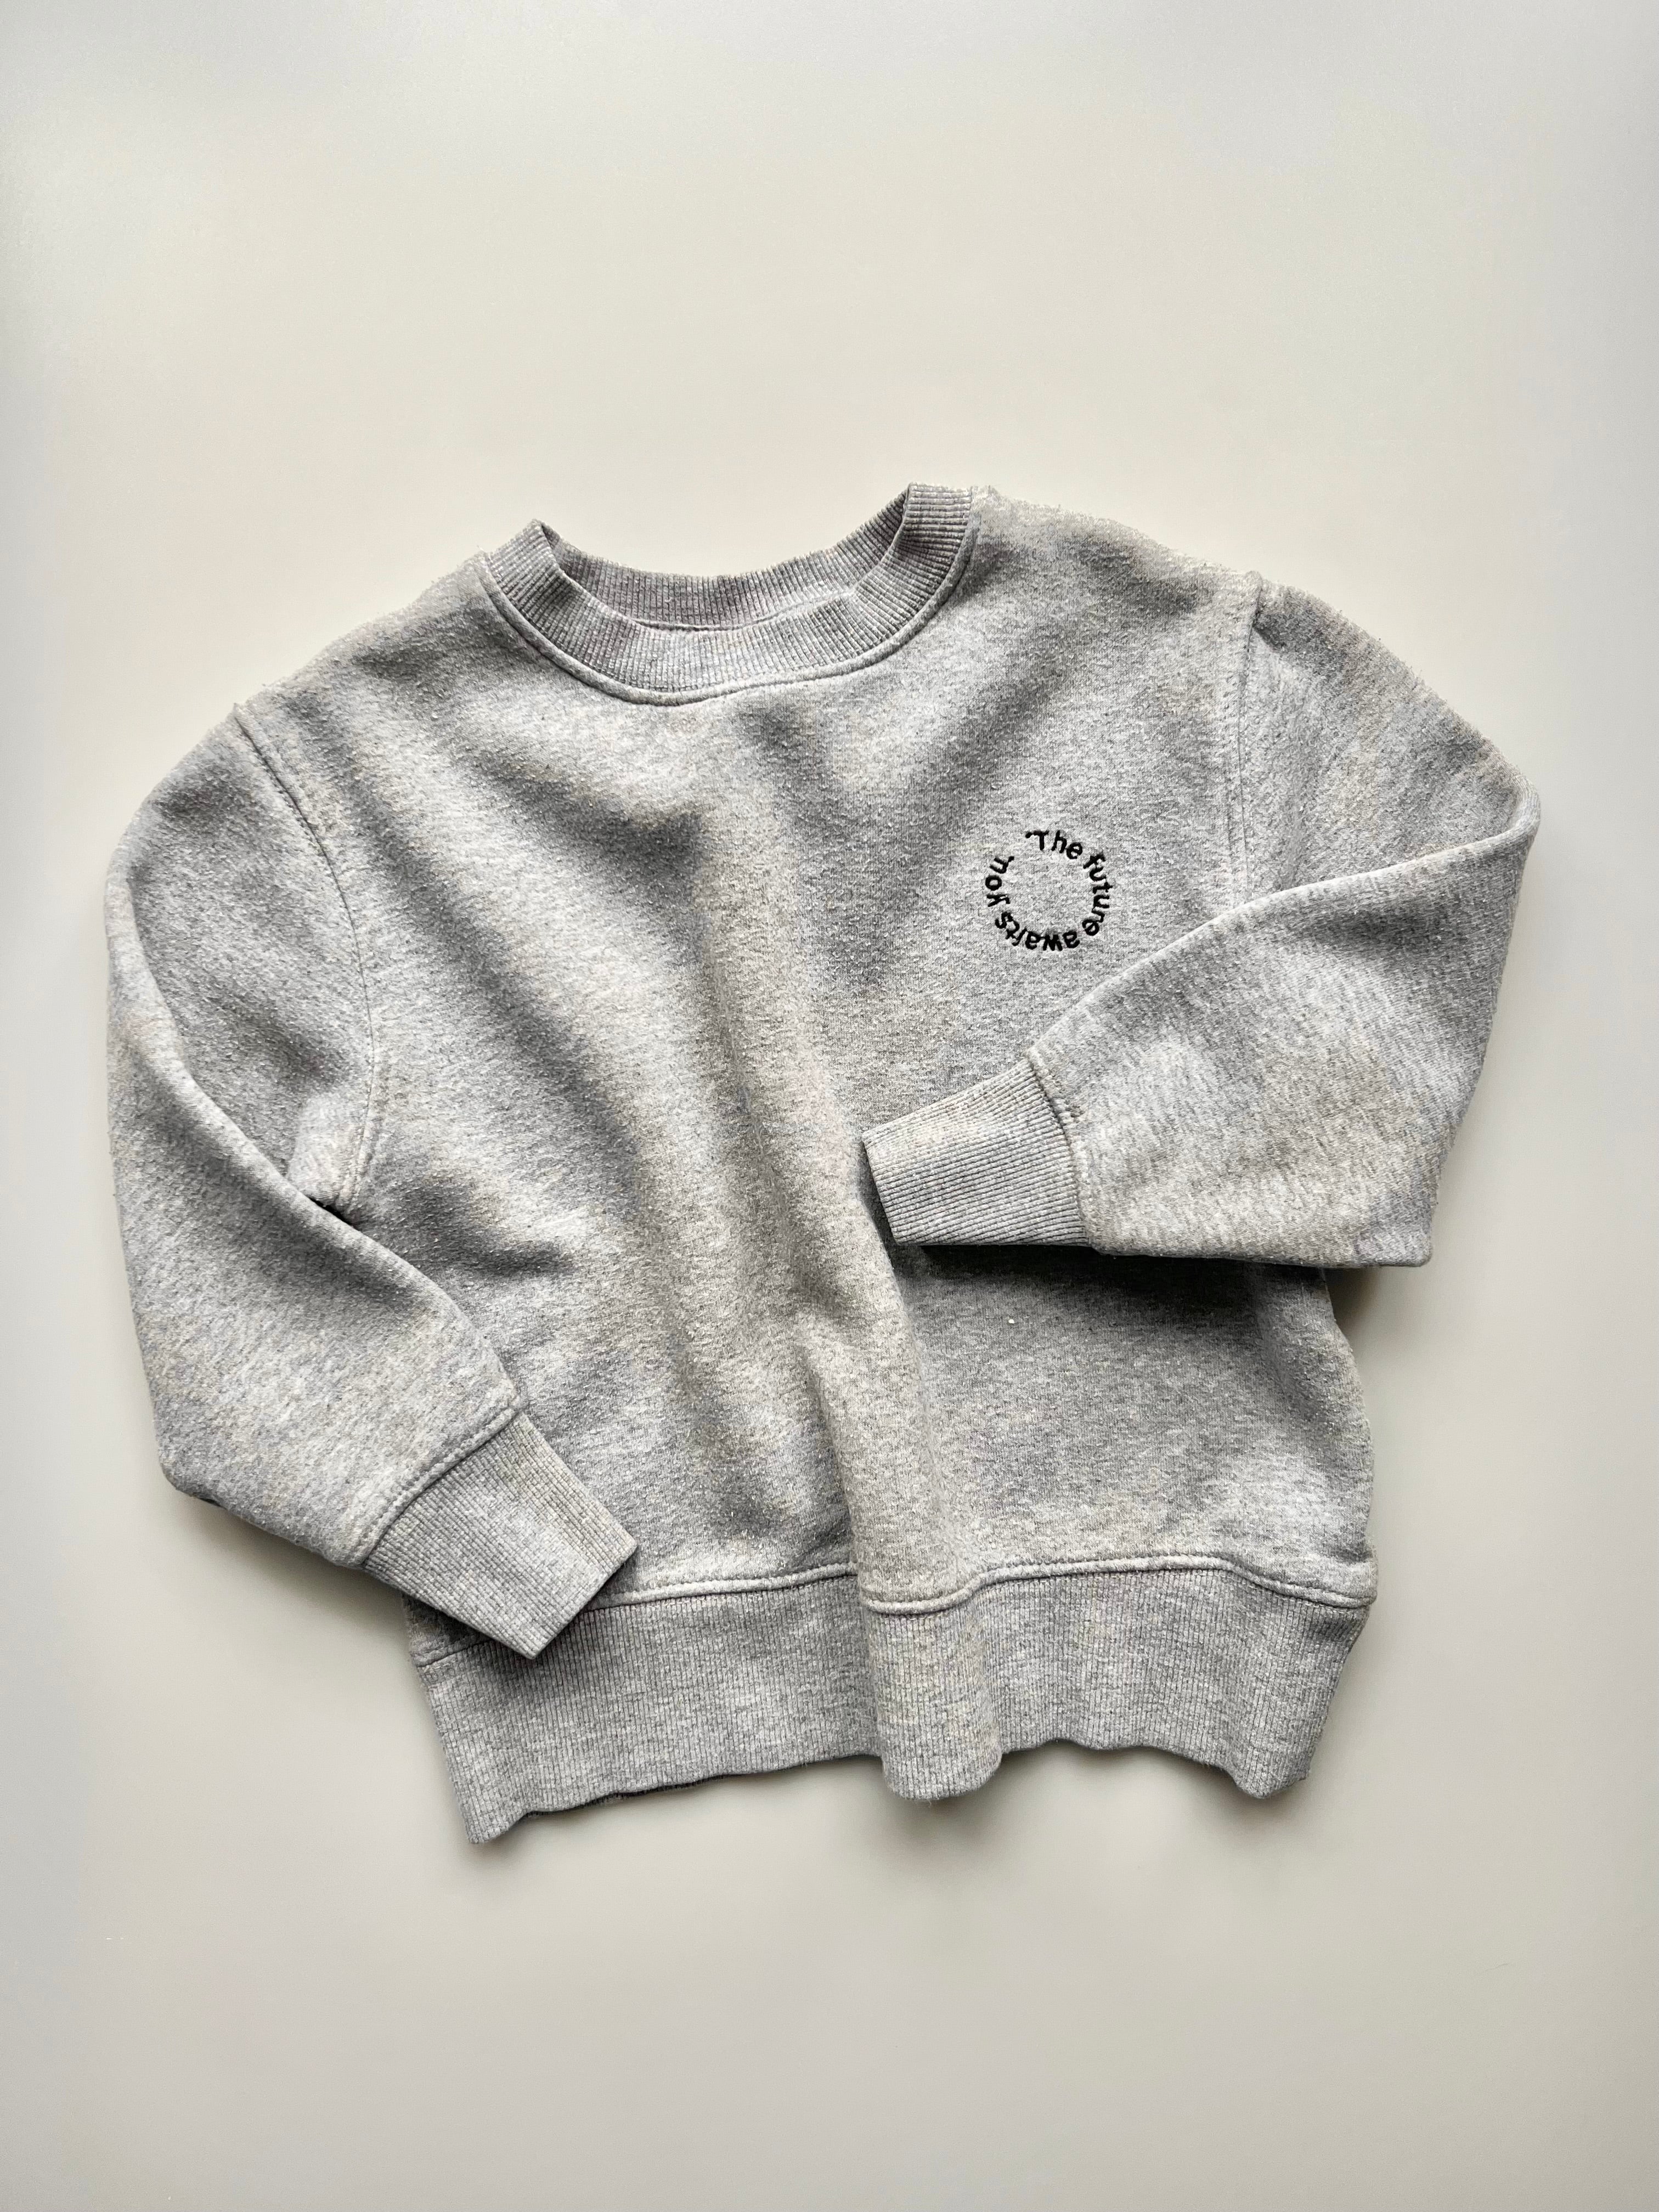 Zara Grey Sweatshirt Age 7